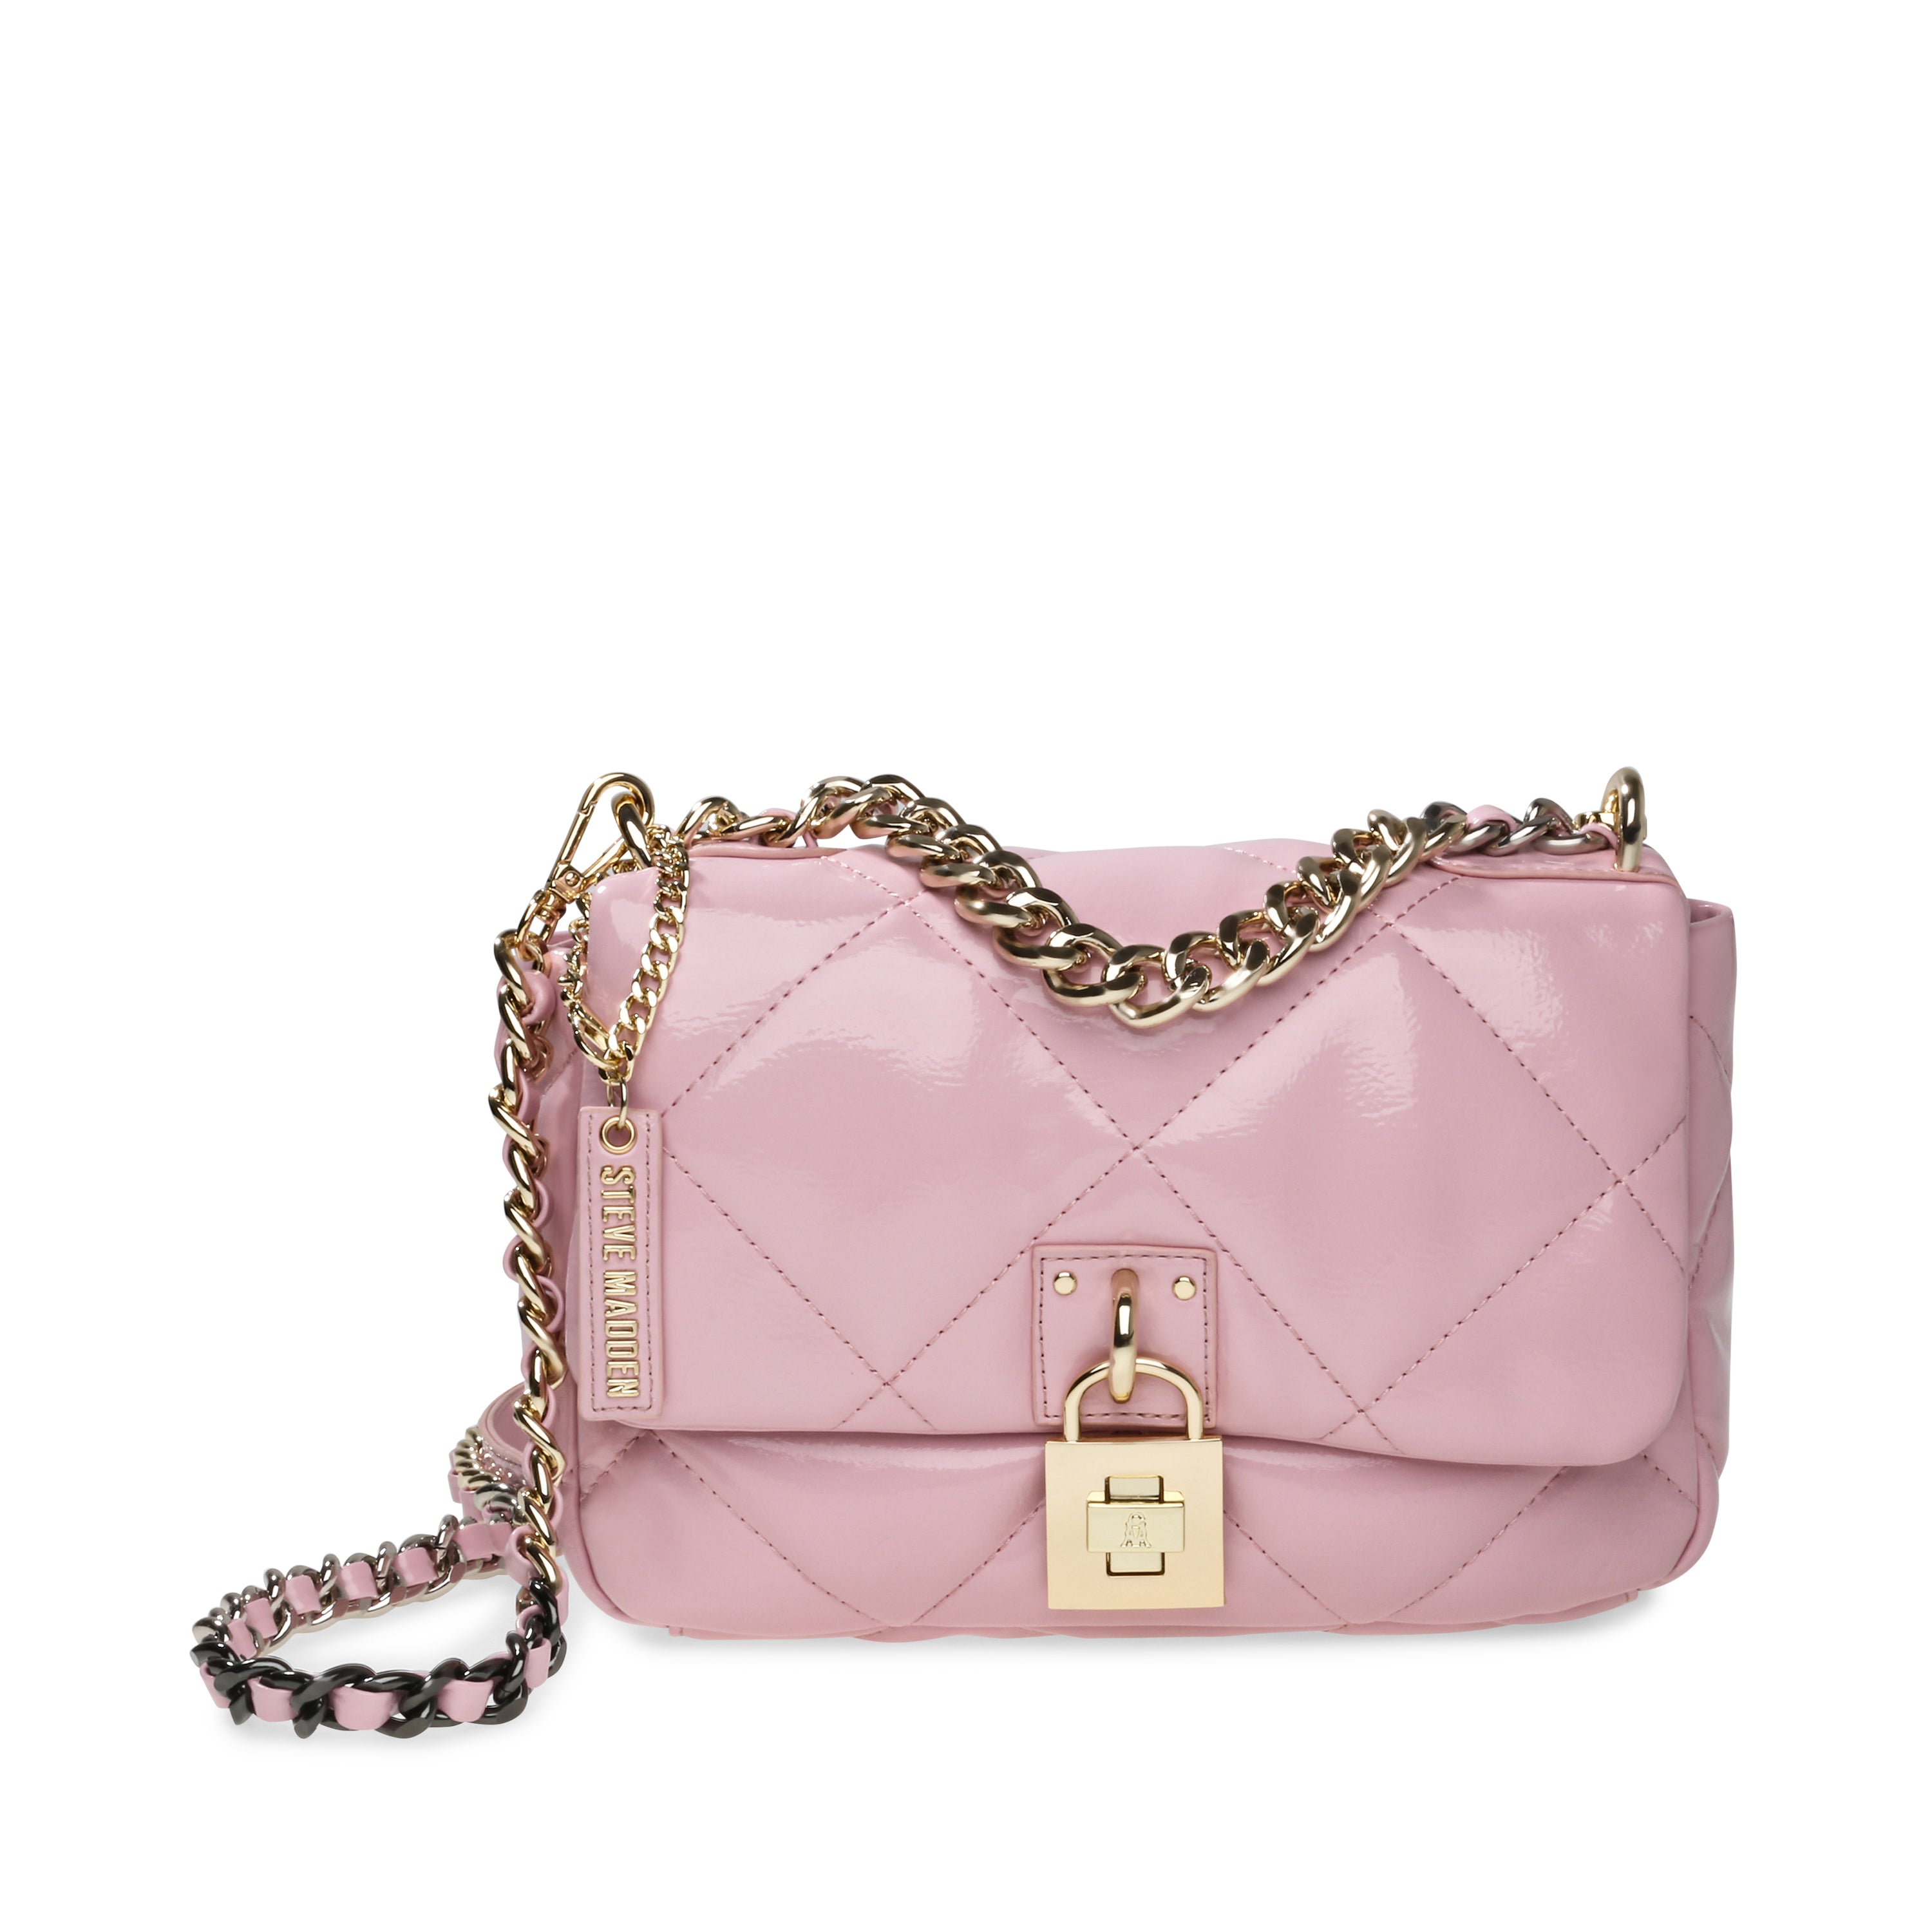 Madden NYC Women's Bowler Handbag with Pocket, Light Pink 